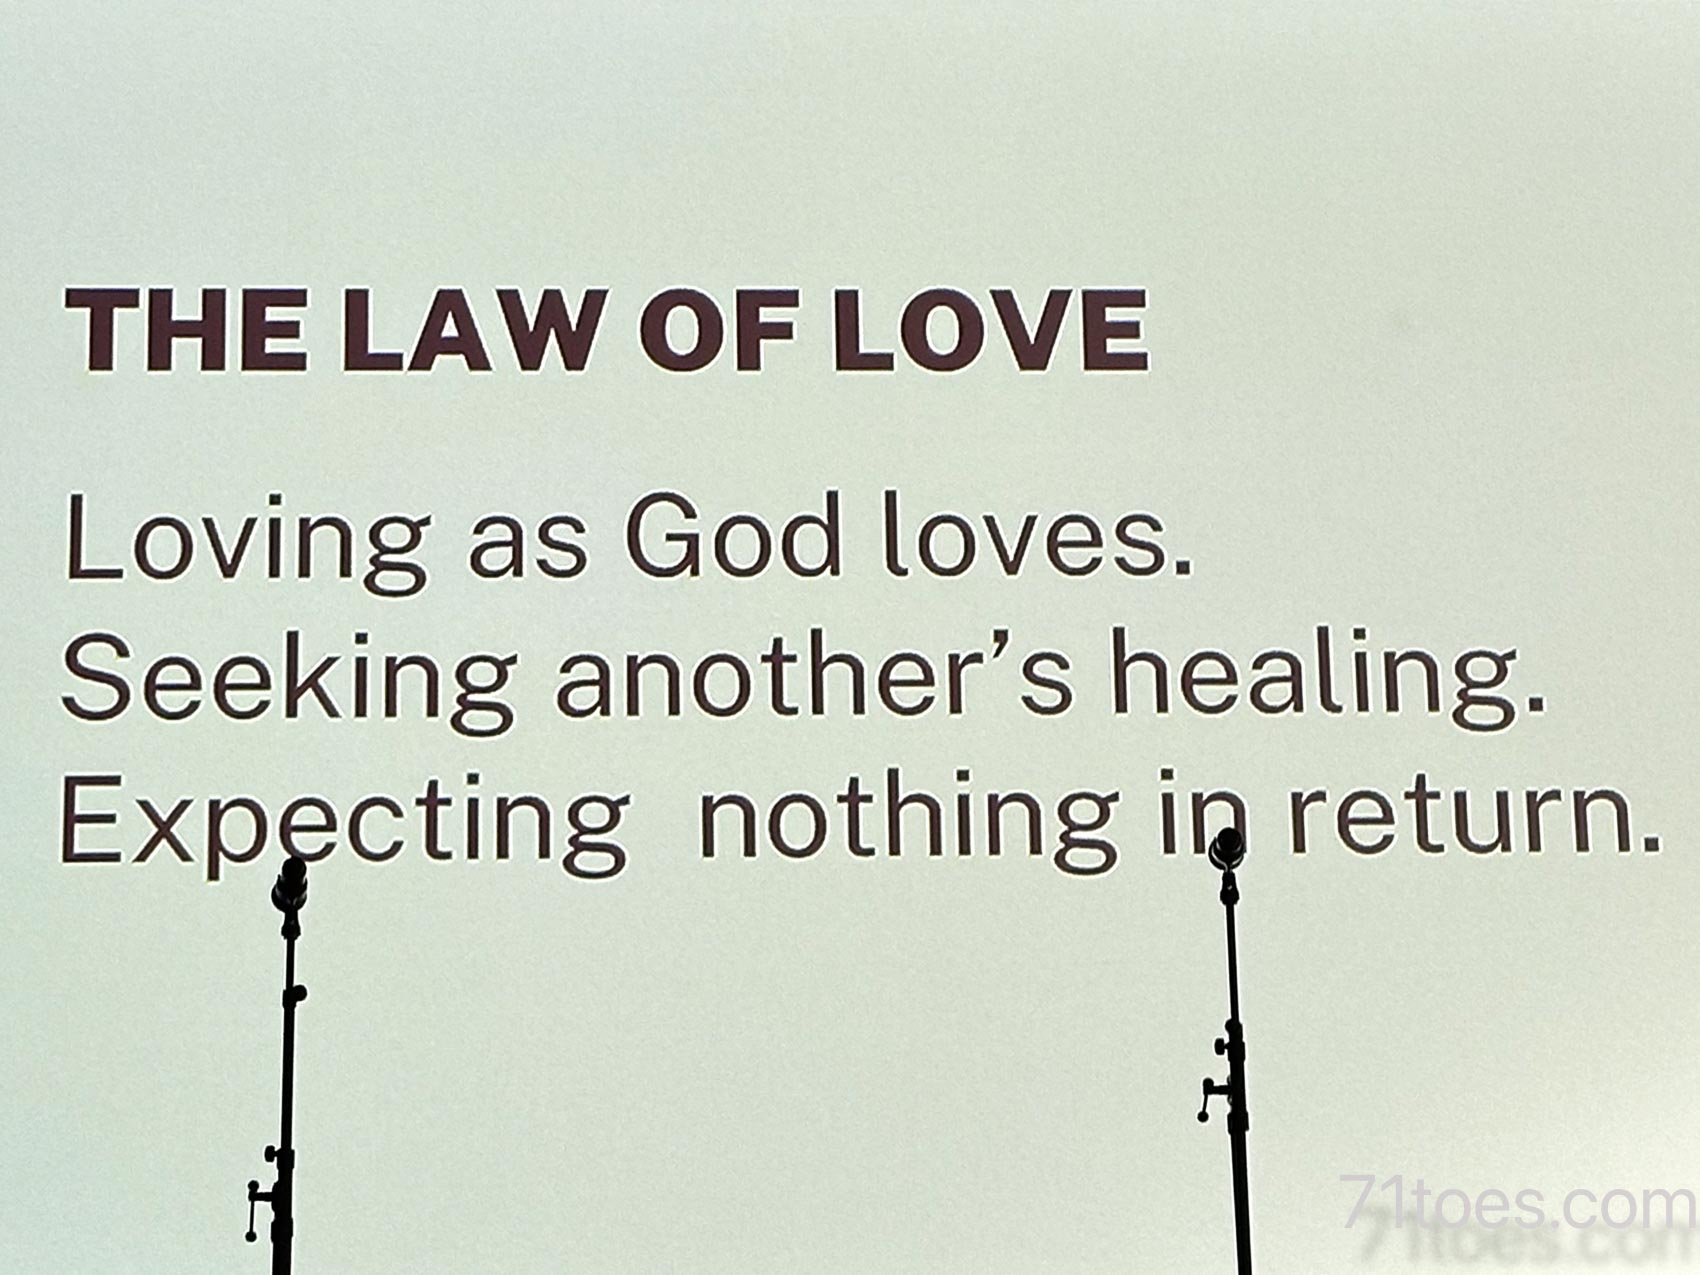 The Law oF love written on a slide